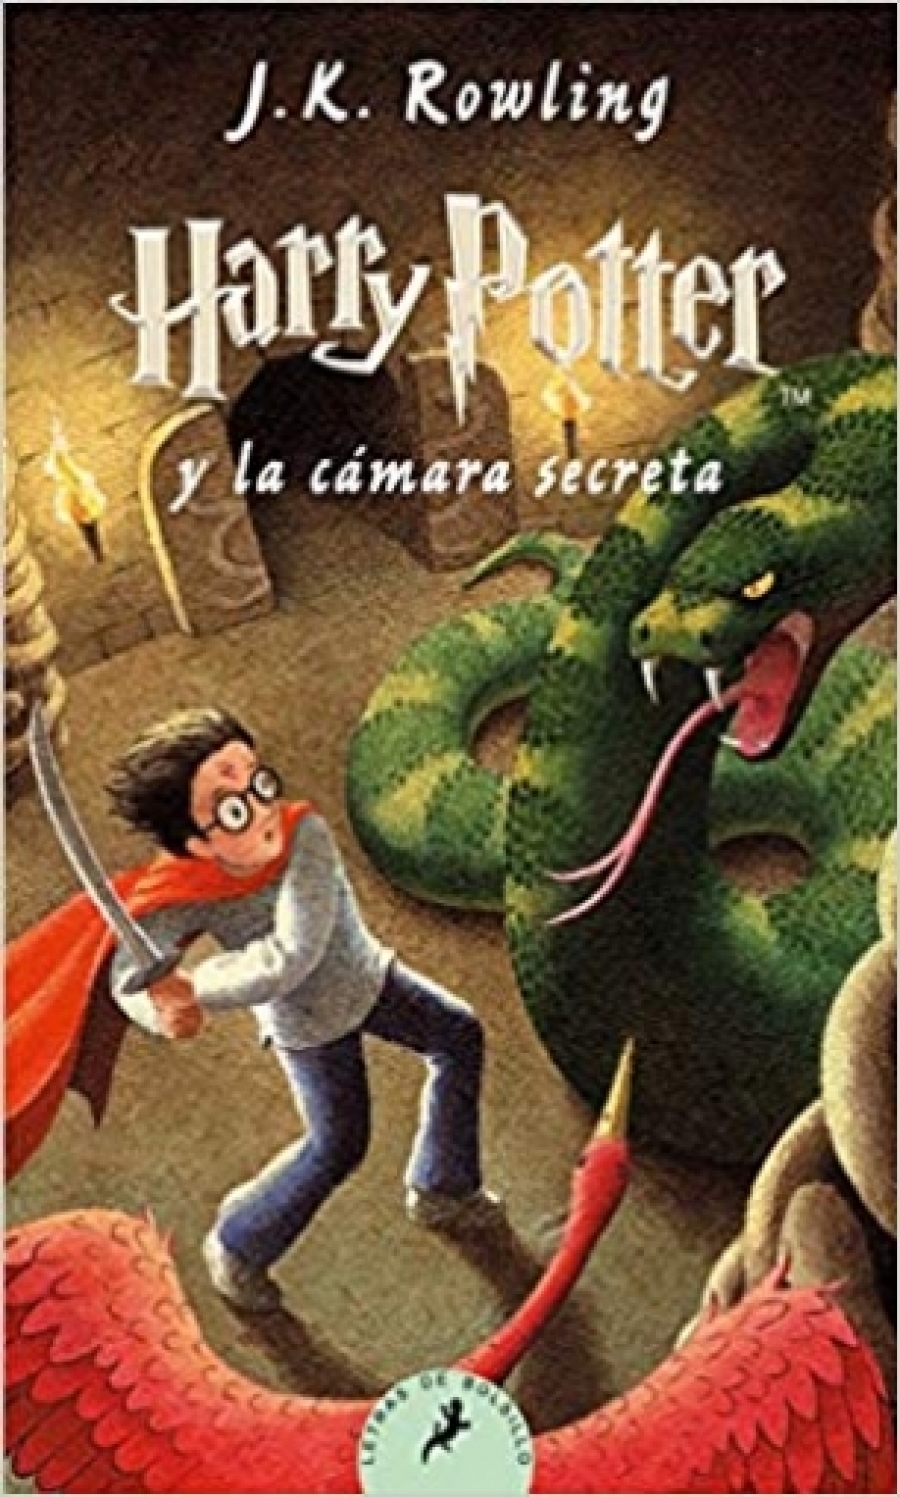 Rowling J.K. Harry Potter y la Camara Secreta 